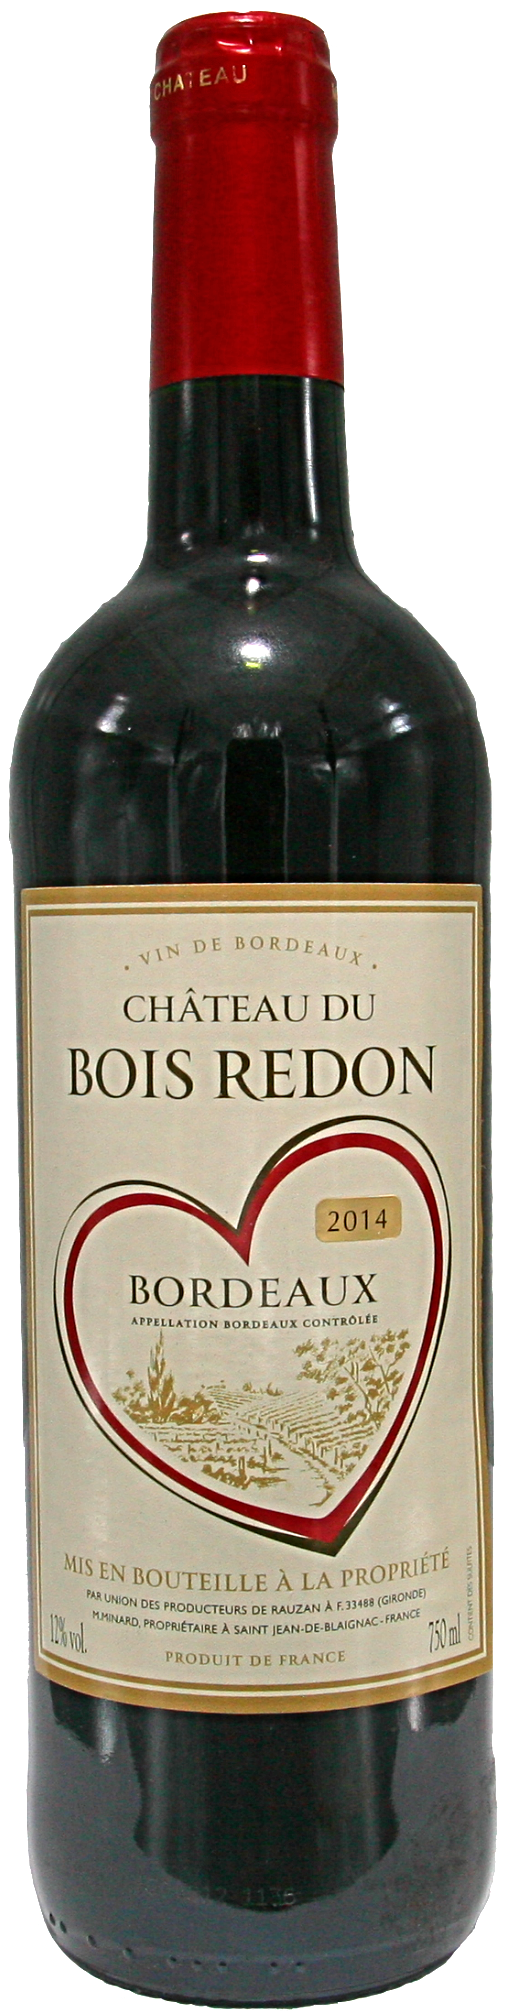 Chateau du Bois Redon 2014